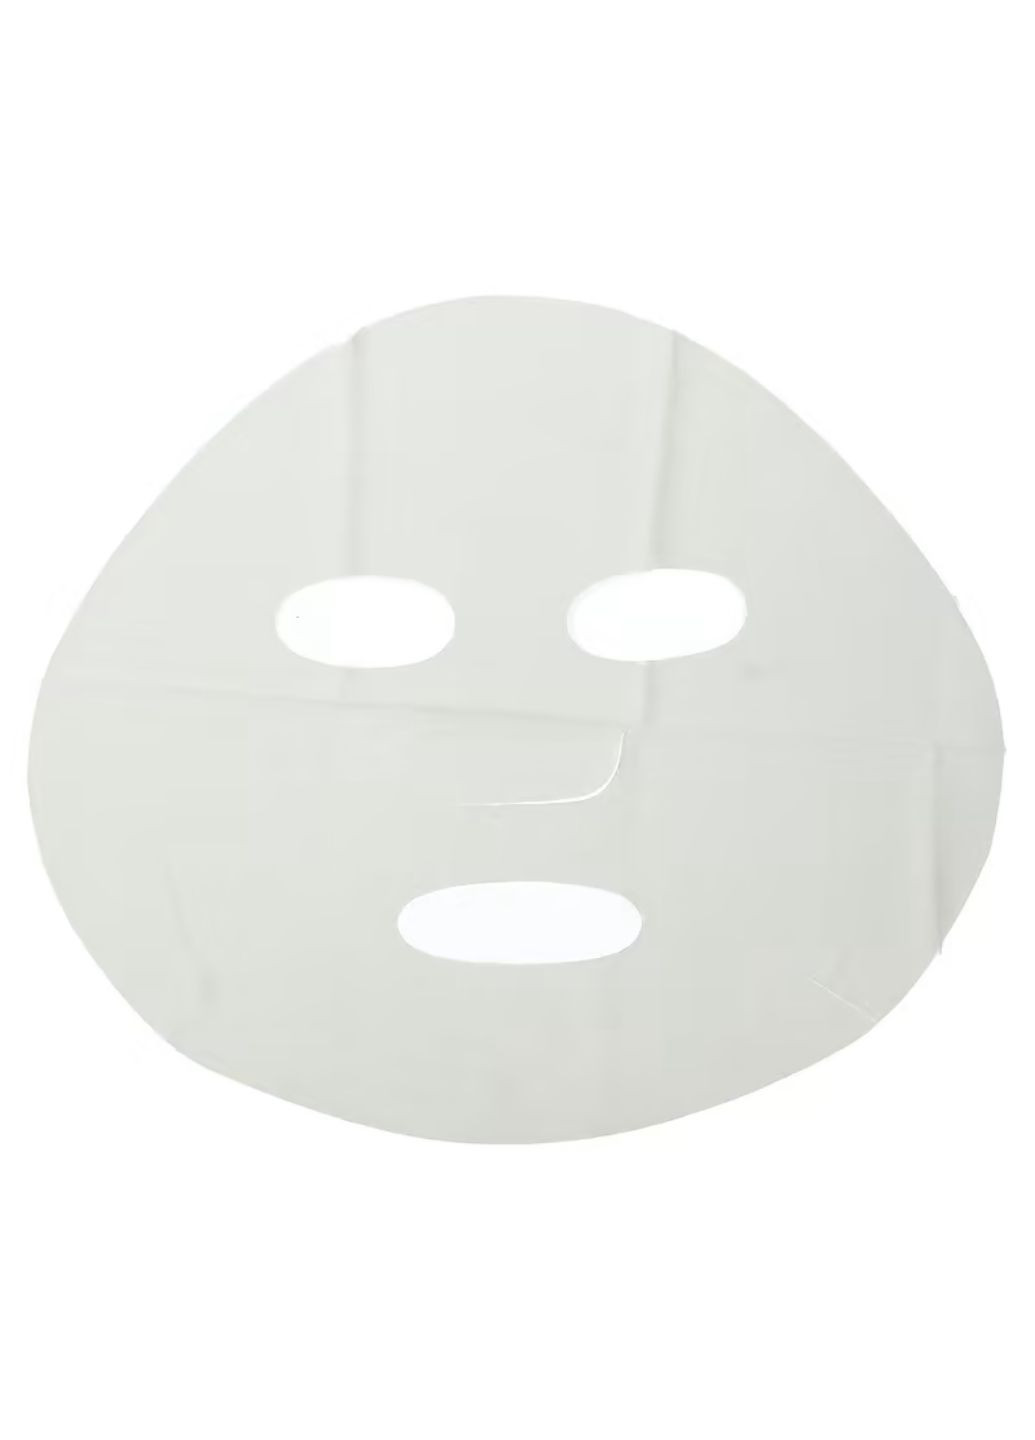 Тканевая маска для лица с эффектом отбеливания от веснушек Whitening Freckle Hydrating Facial Mask, 25 мл Tsosk (277974161)